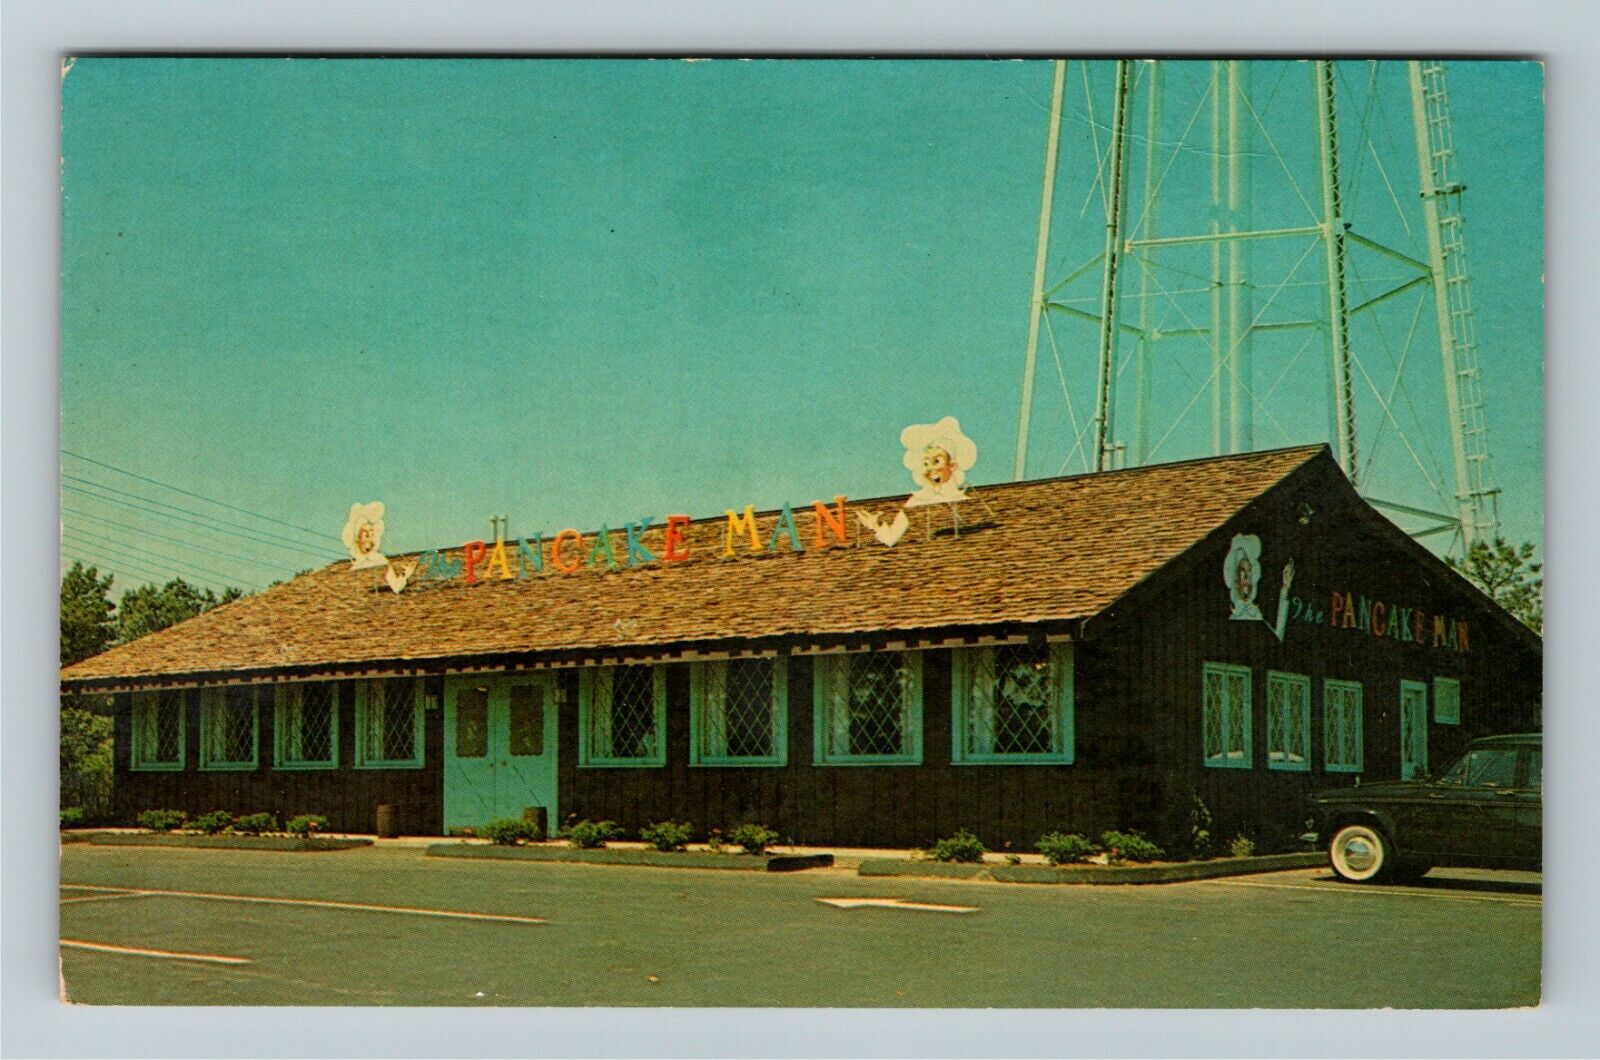 Cape Cod MA-Massachusetts, Pancake Man Restaurant, Advertising, Vintage Postcard